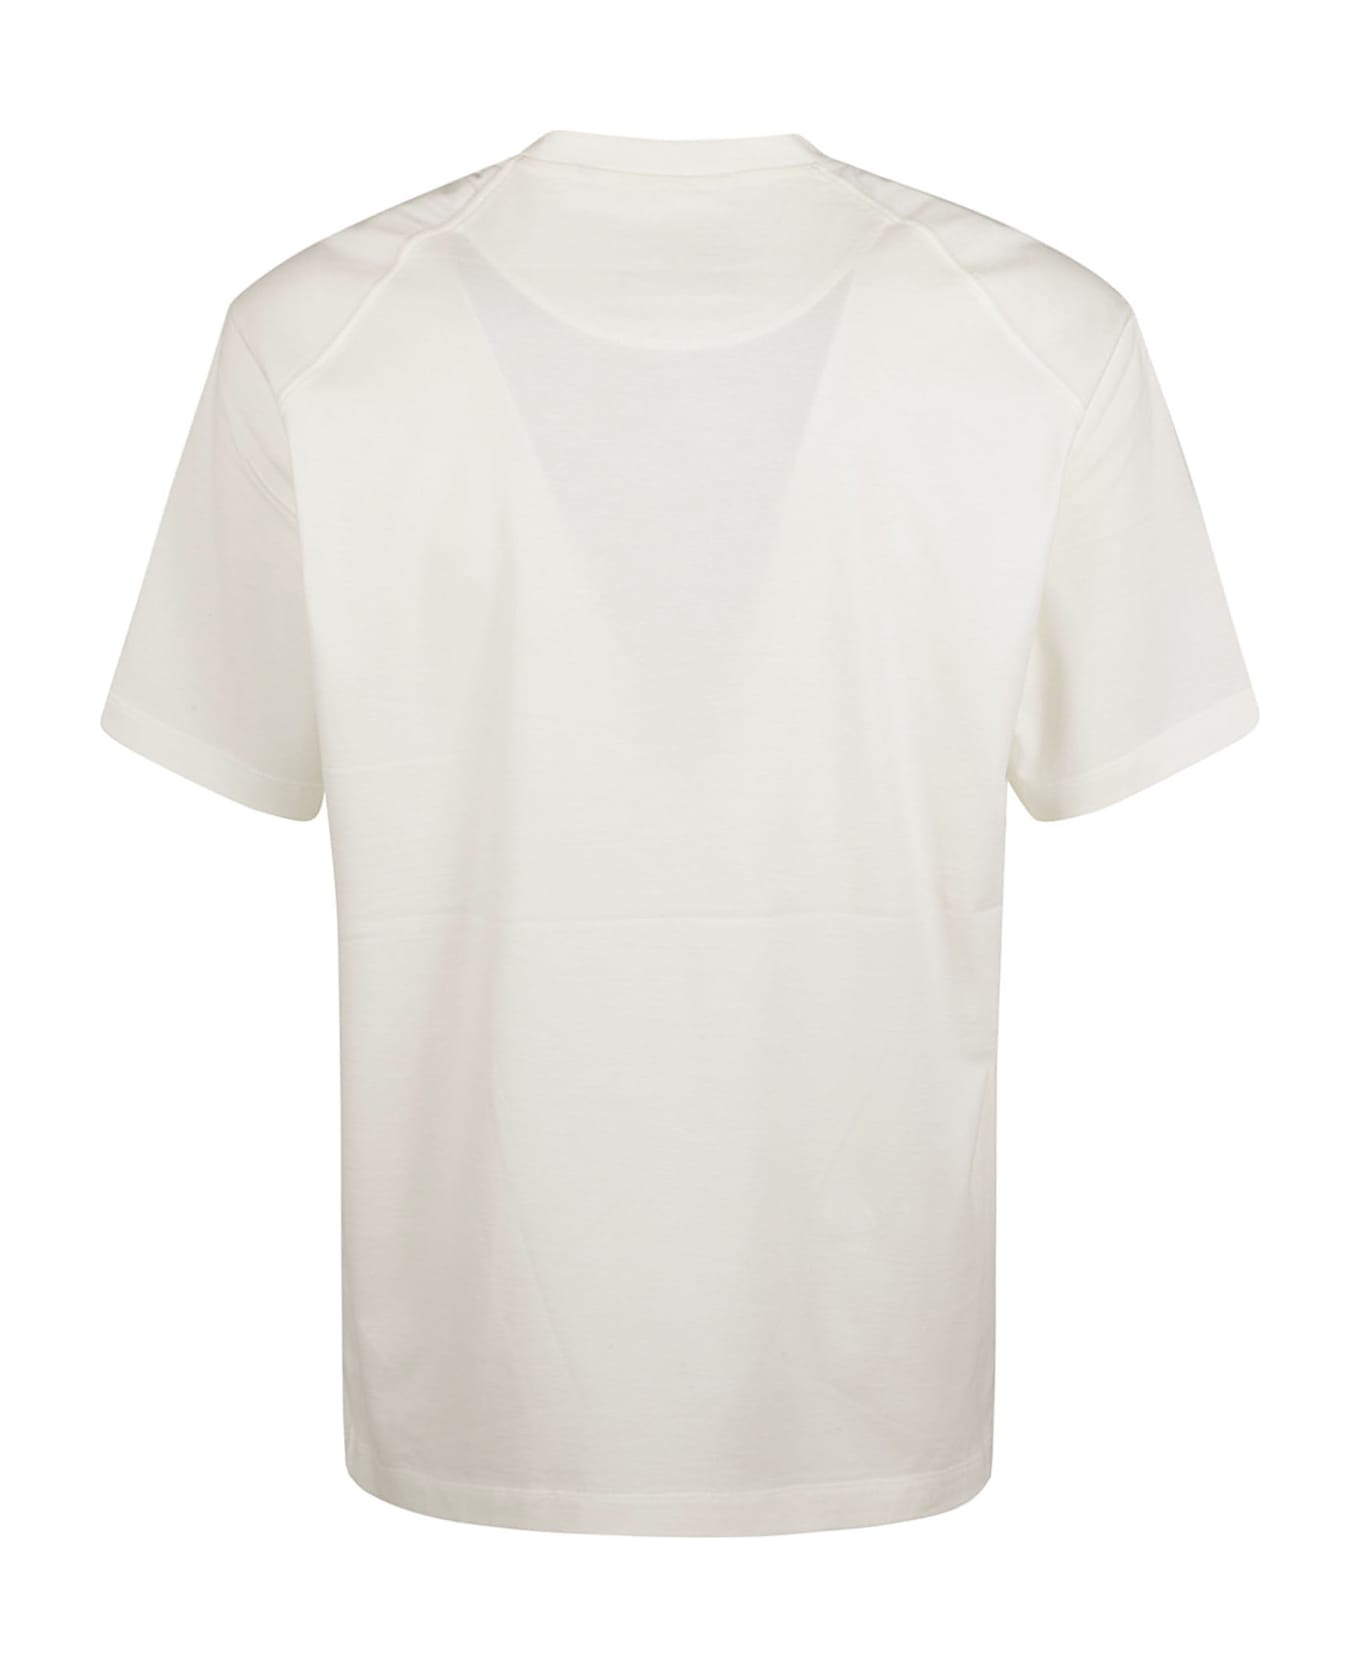 Y-3 Gfx Logo T-shirt - Off-White